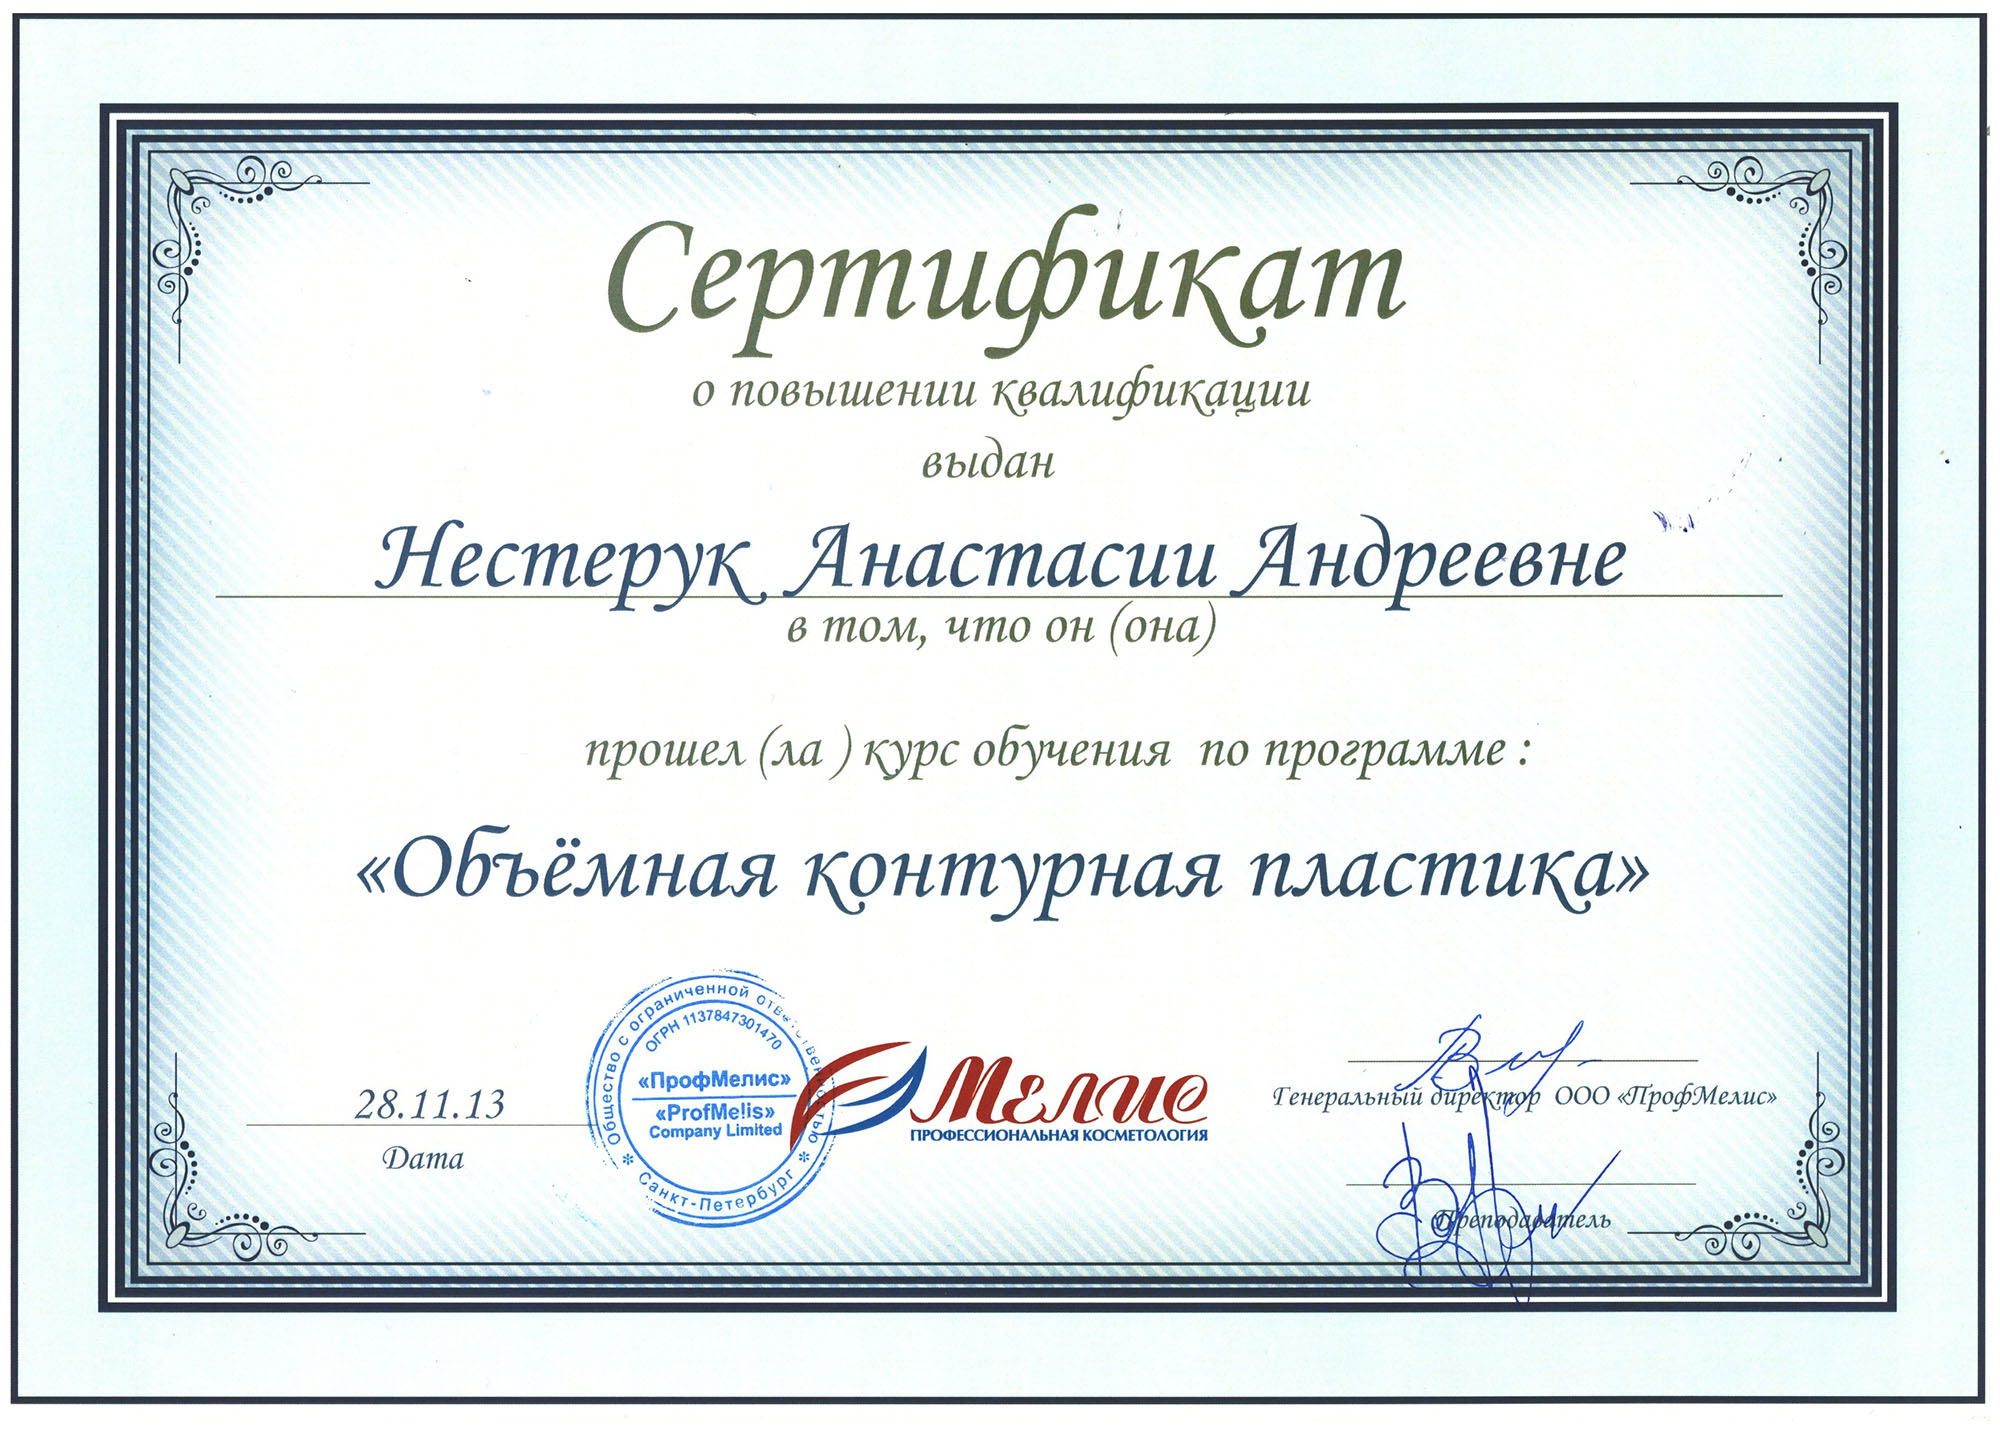 Сертификат — Курс по программе «Объёмная контурная пластика». Яблочко Анастасия Андреевна